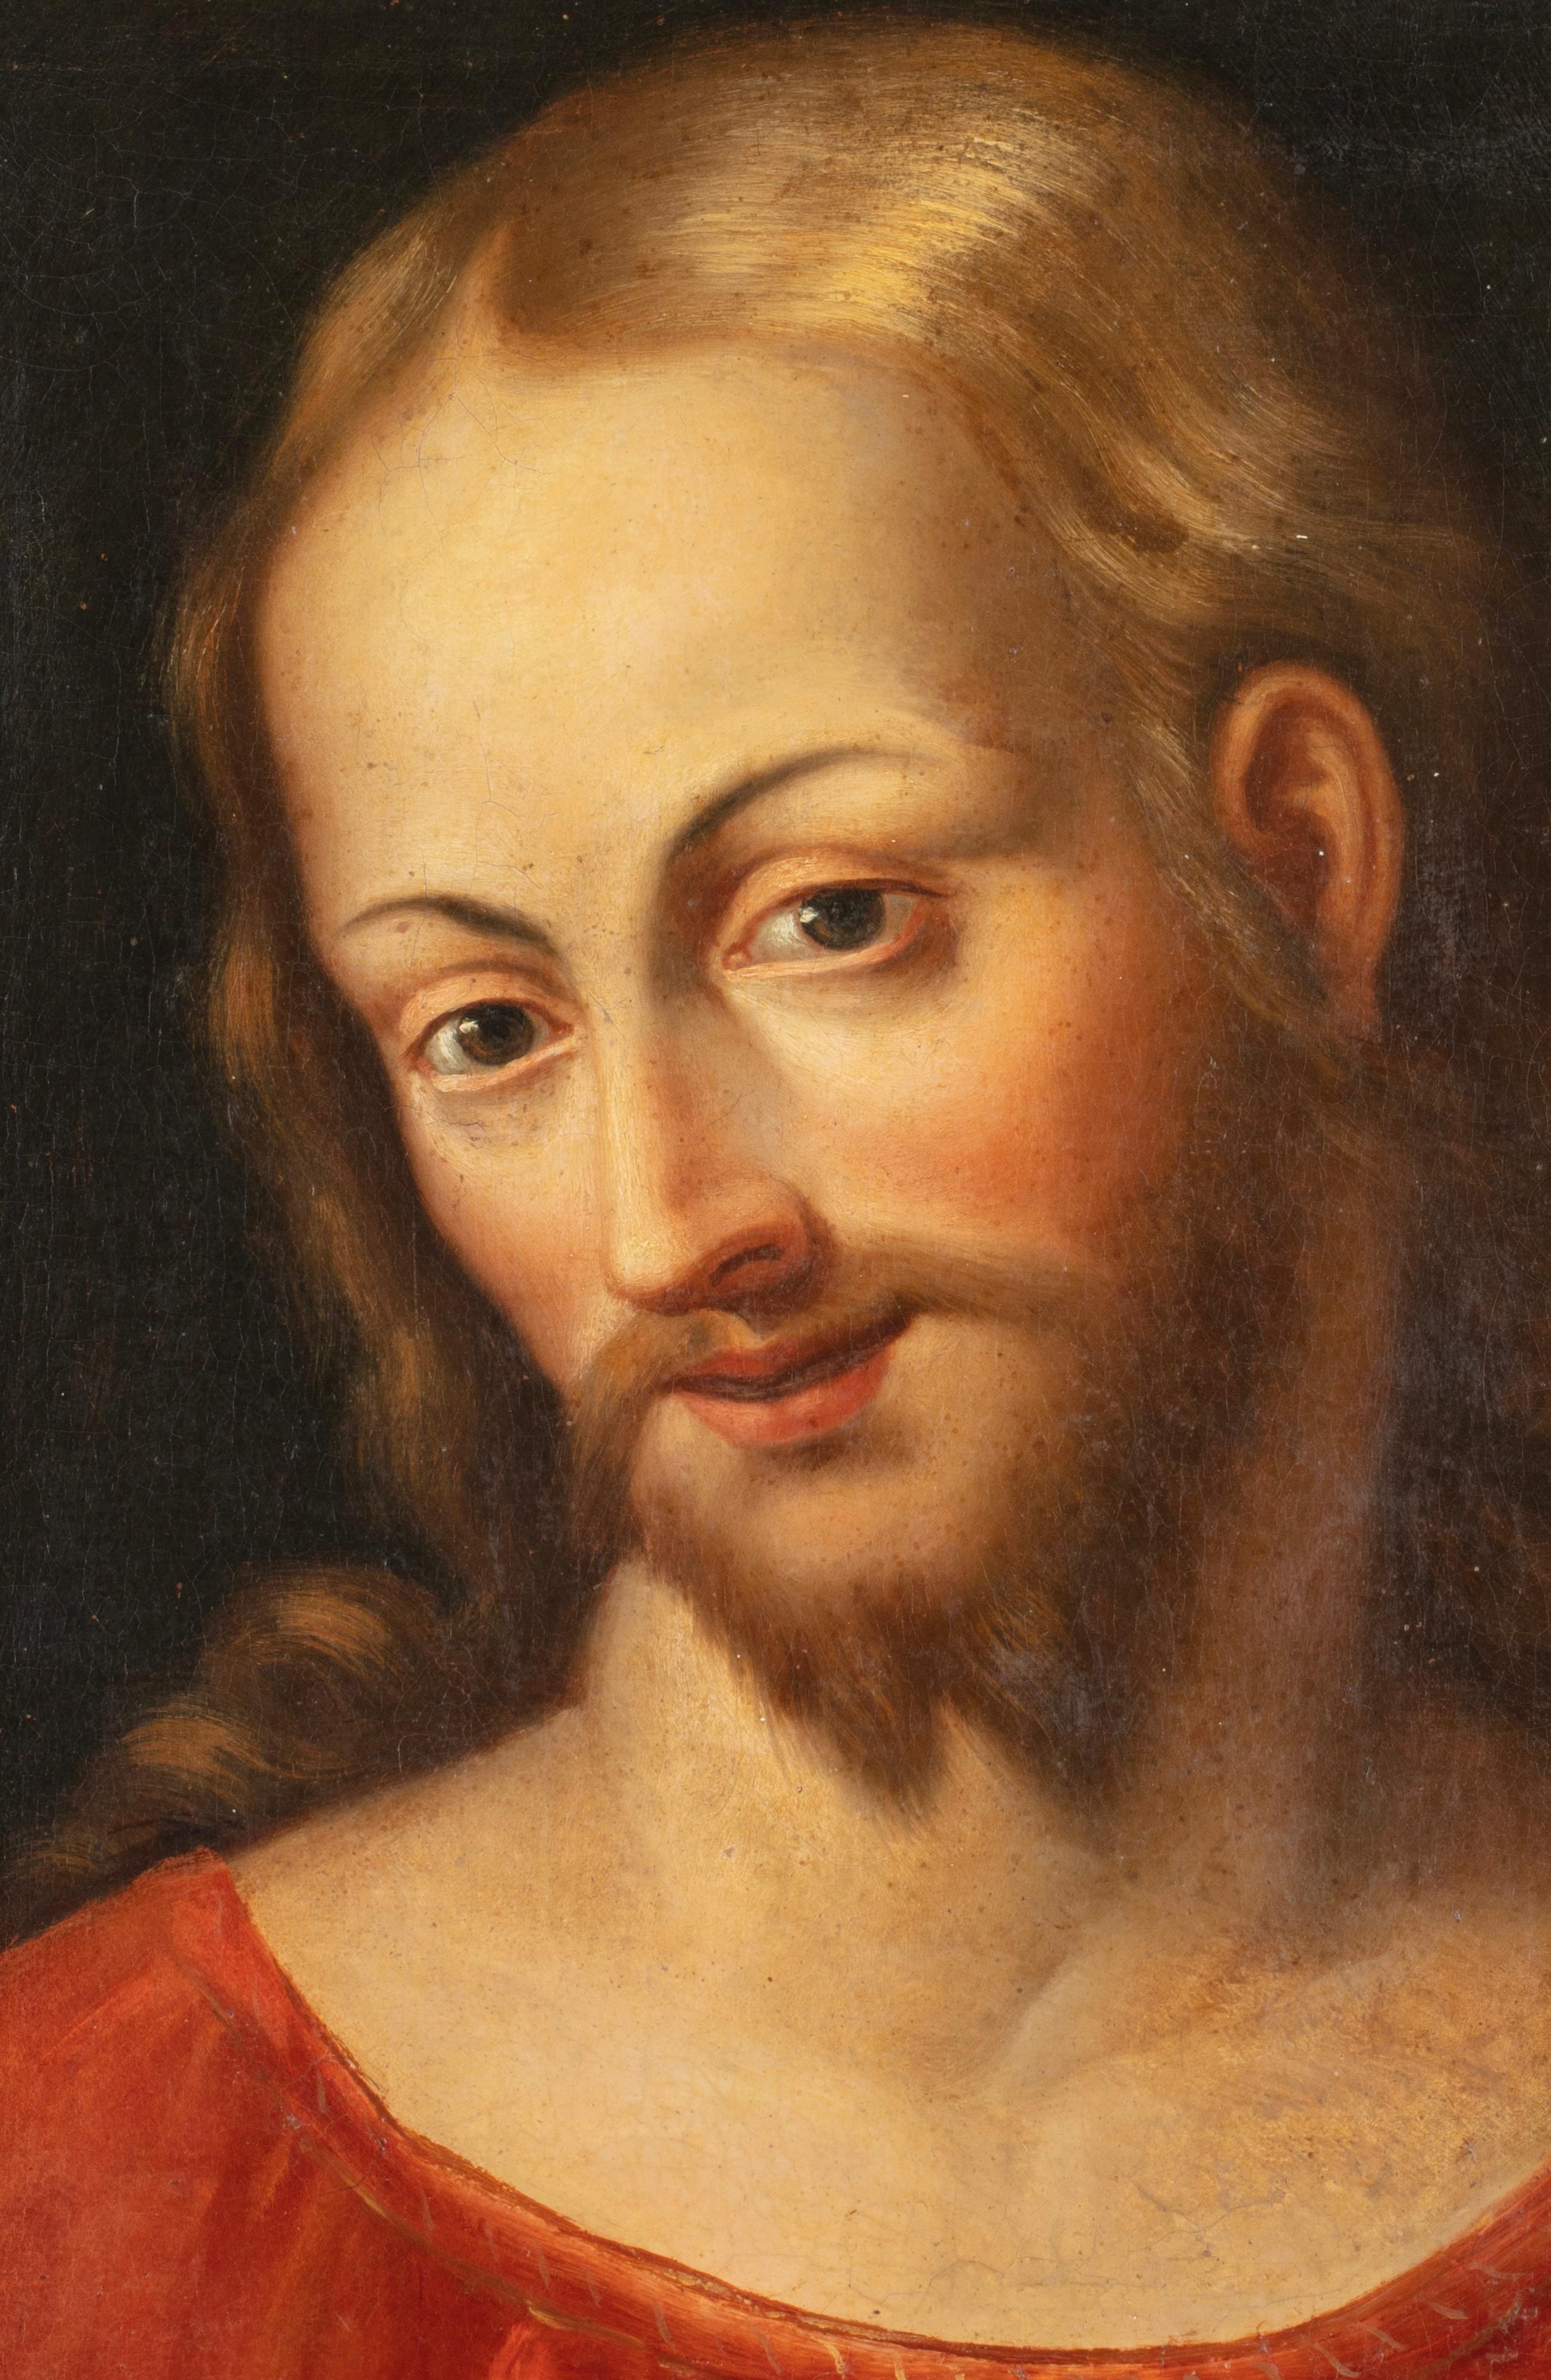 Bernardino Detti, Gesicht Christi, Ölgemälde auf Leinwand, 16. Jahrhundert (Alte Meister), Painting, von Bernardino Detti (Pistoia, 1498 – Pistoia, 1572)